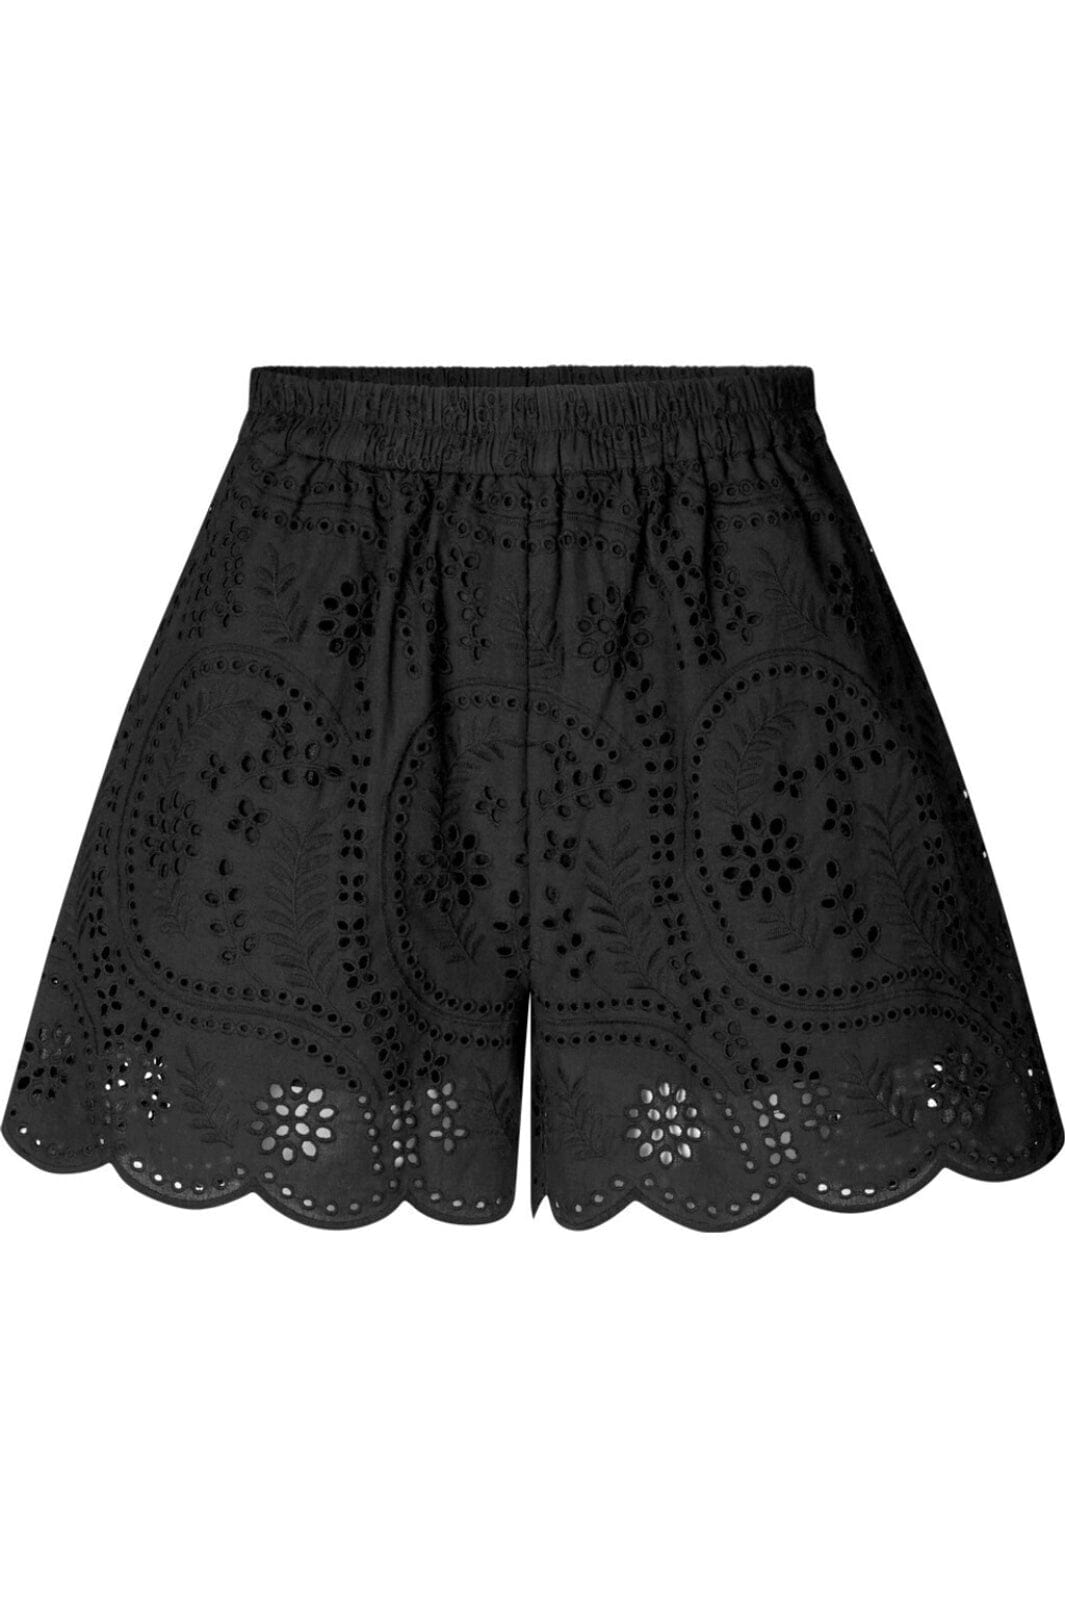 Forudbestilling - Cras - Breezecras Shorts - 9999 Black Shorts 